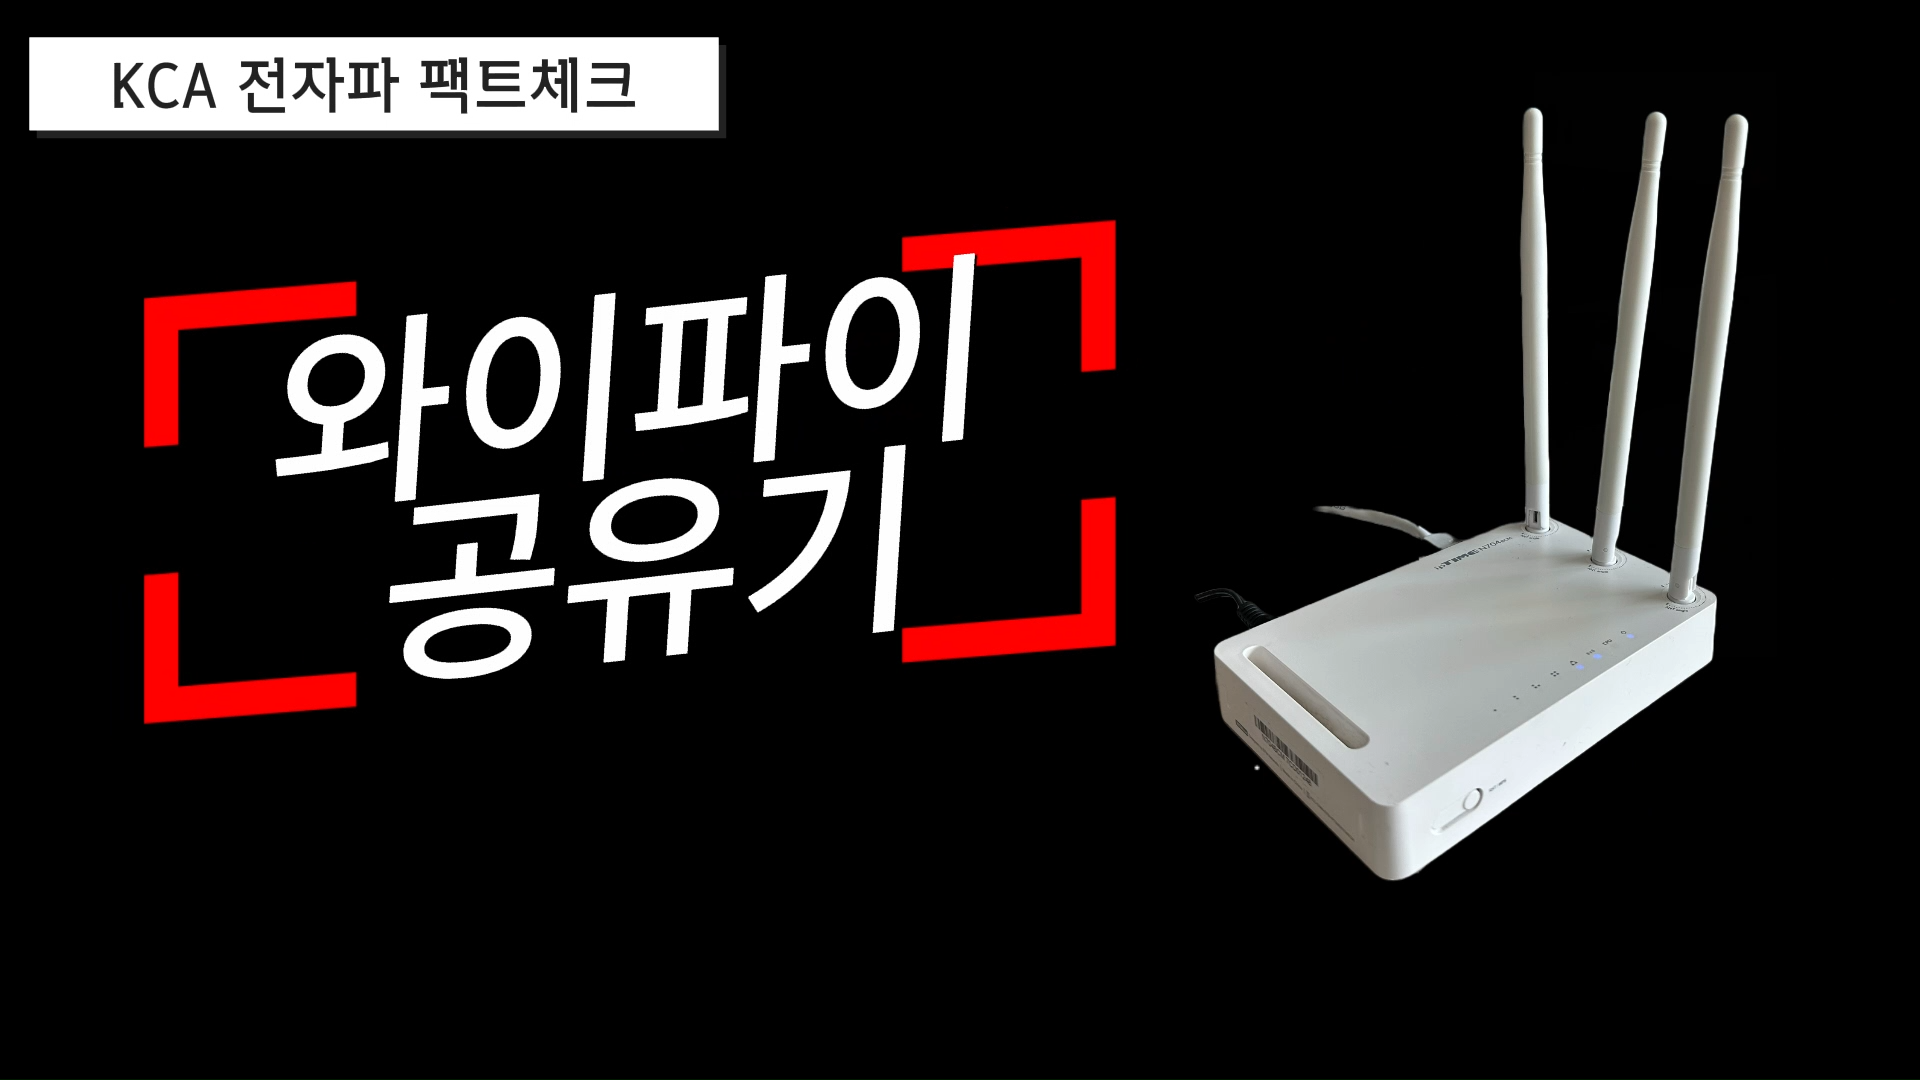 「KCA WiFi공유기 전자파 측정결과 안내」